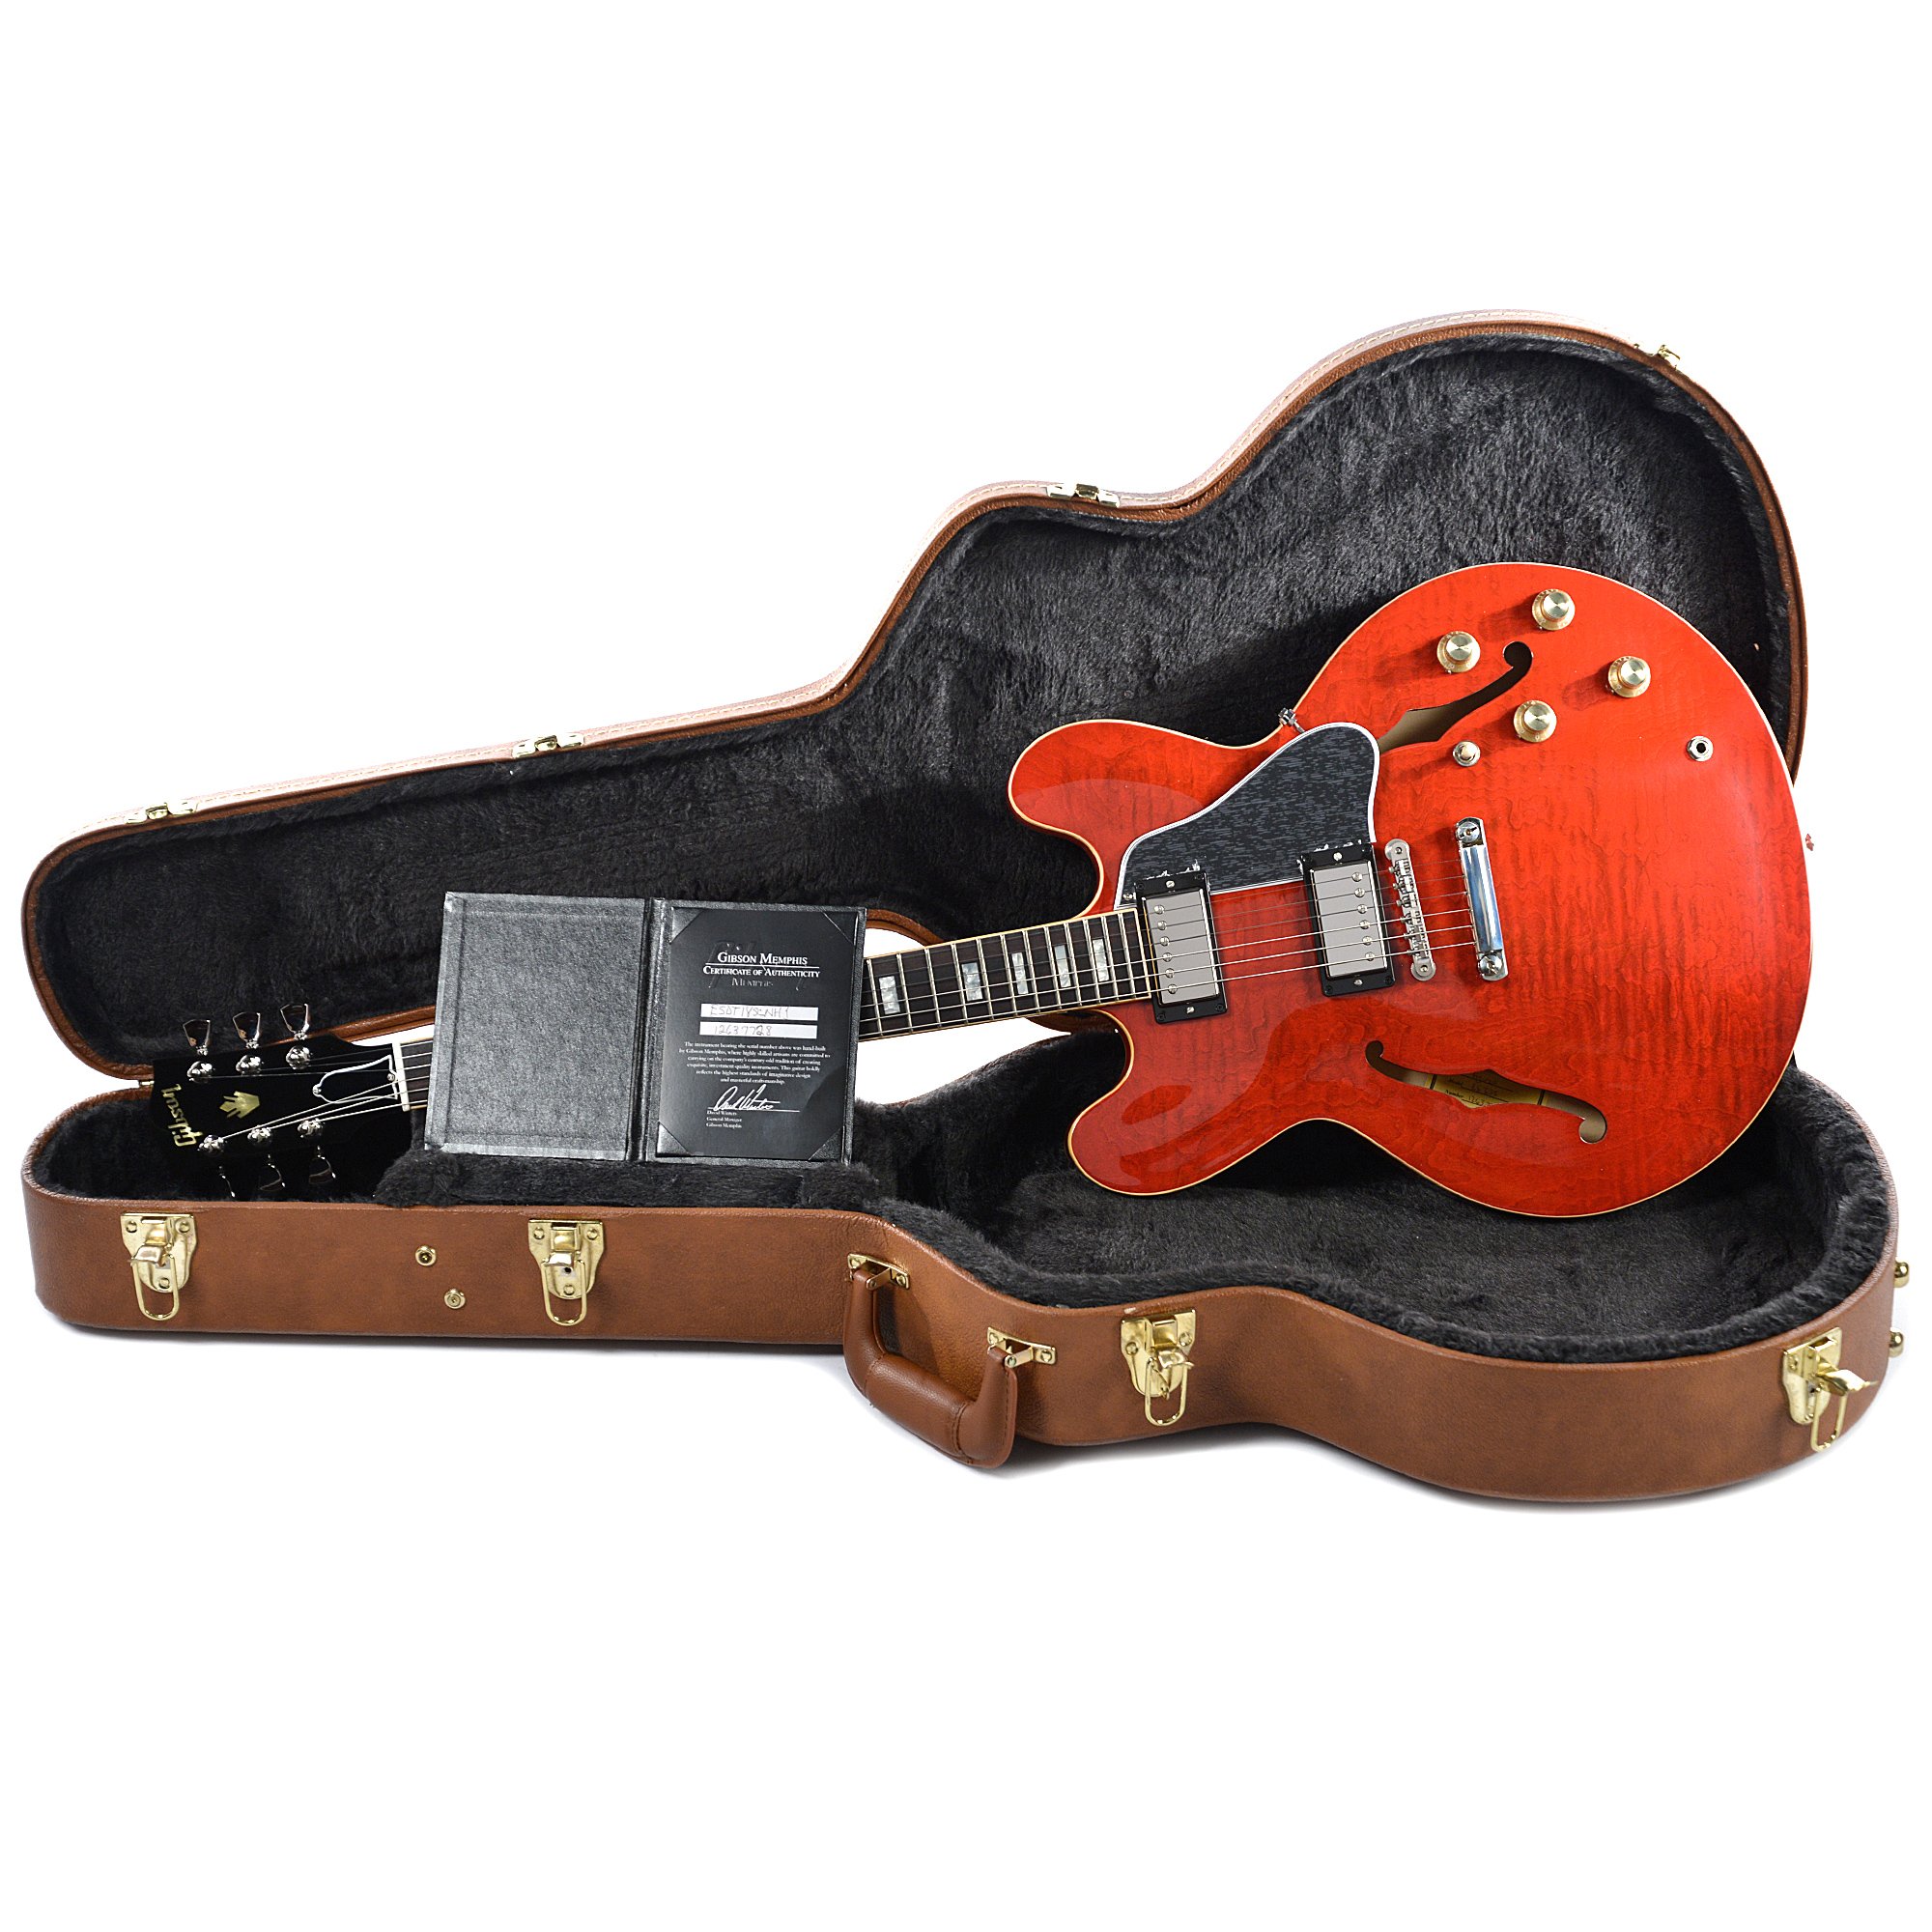 Gibson Es-335 Figured 2018 Ltd - Antique Sixties Cherry - Semi-hollow electric guitar - Variation 5